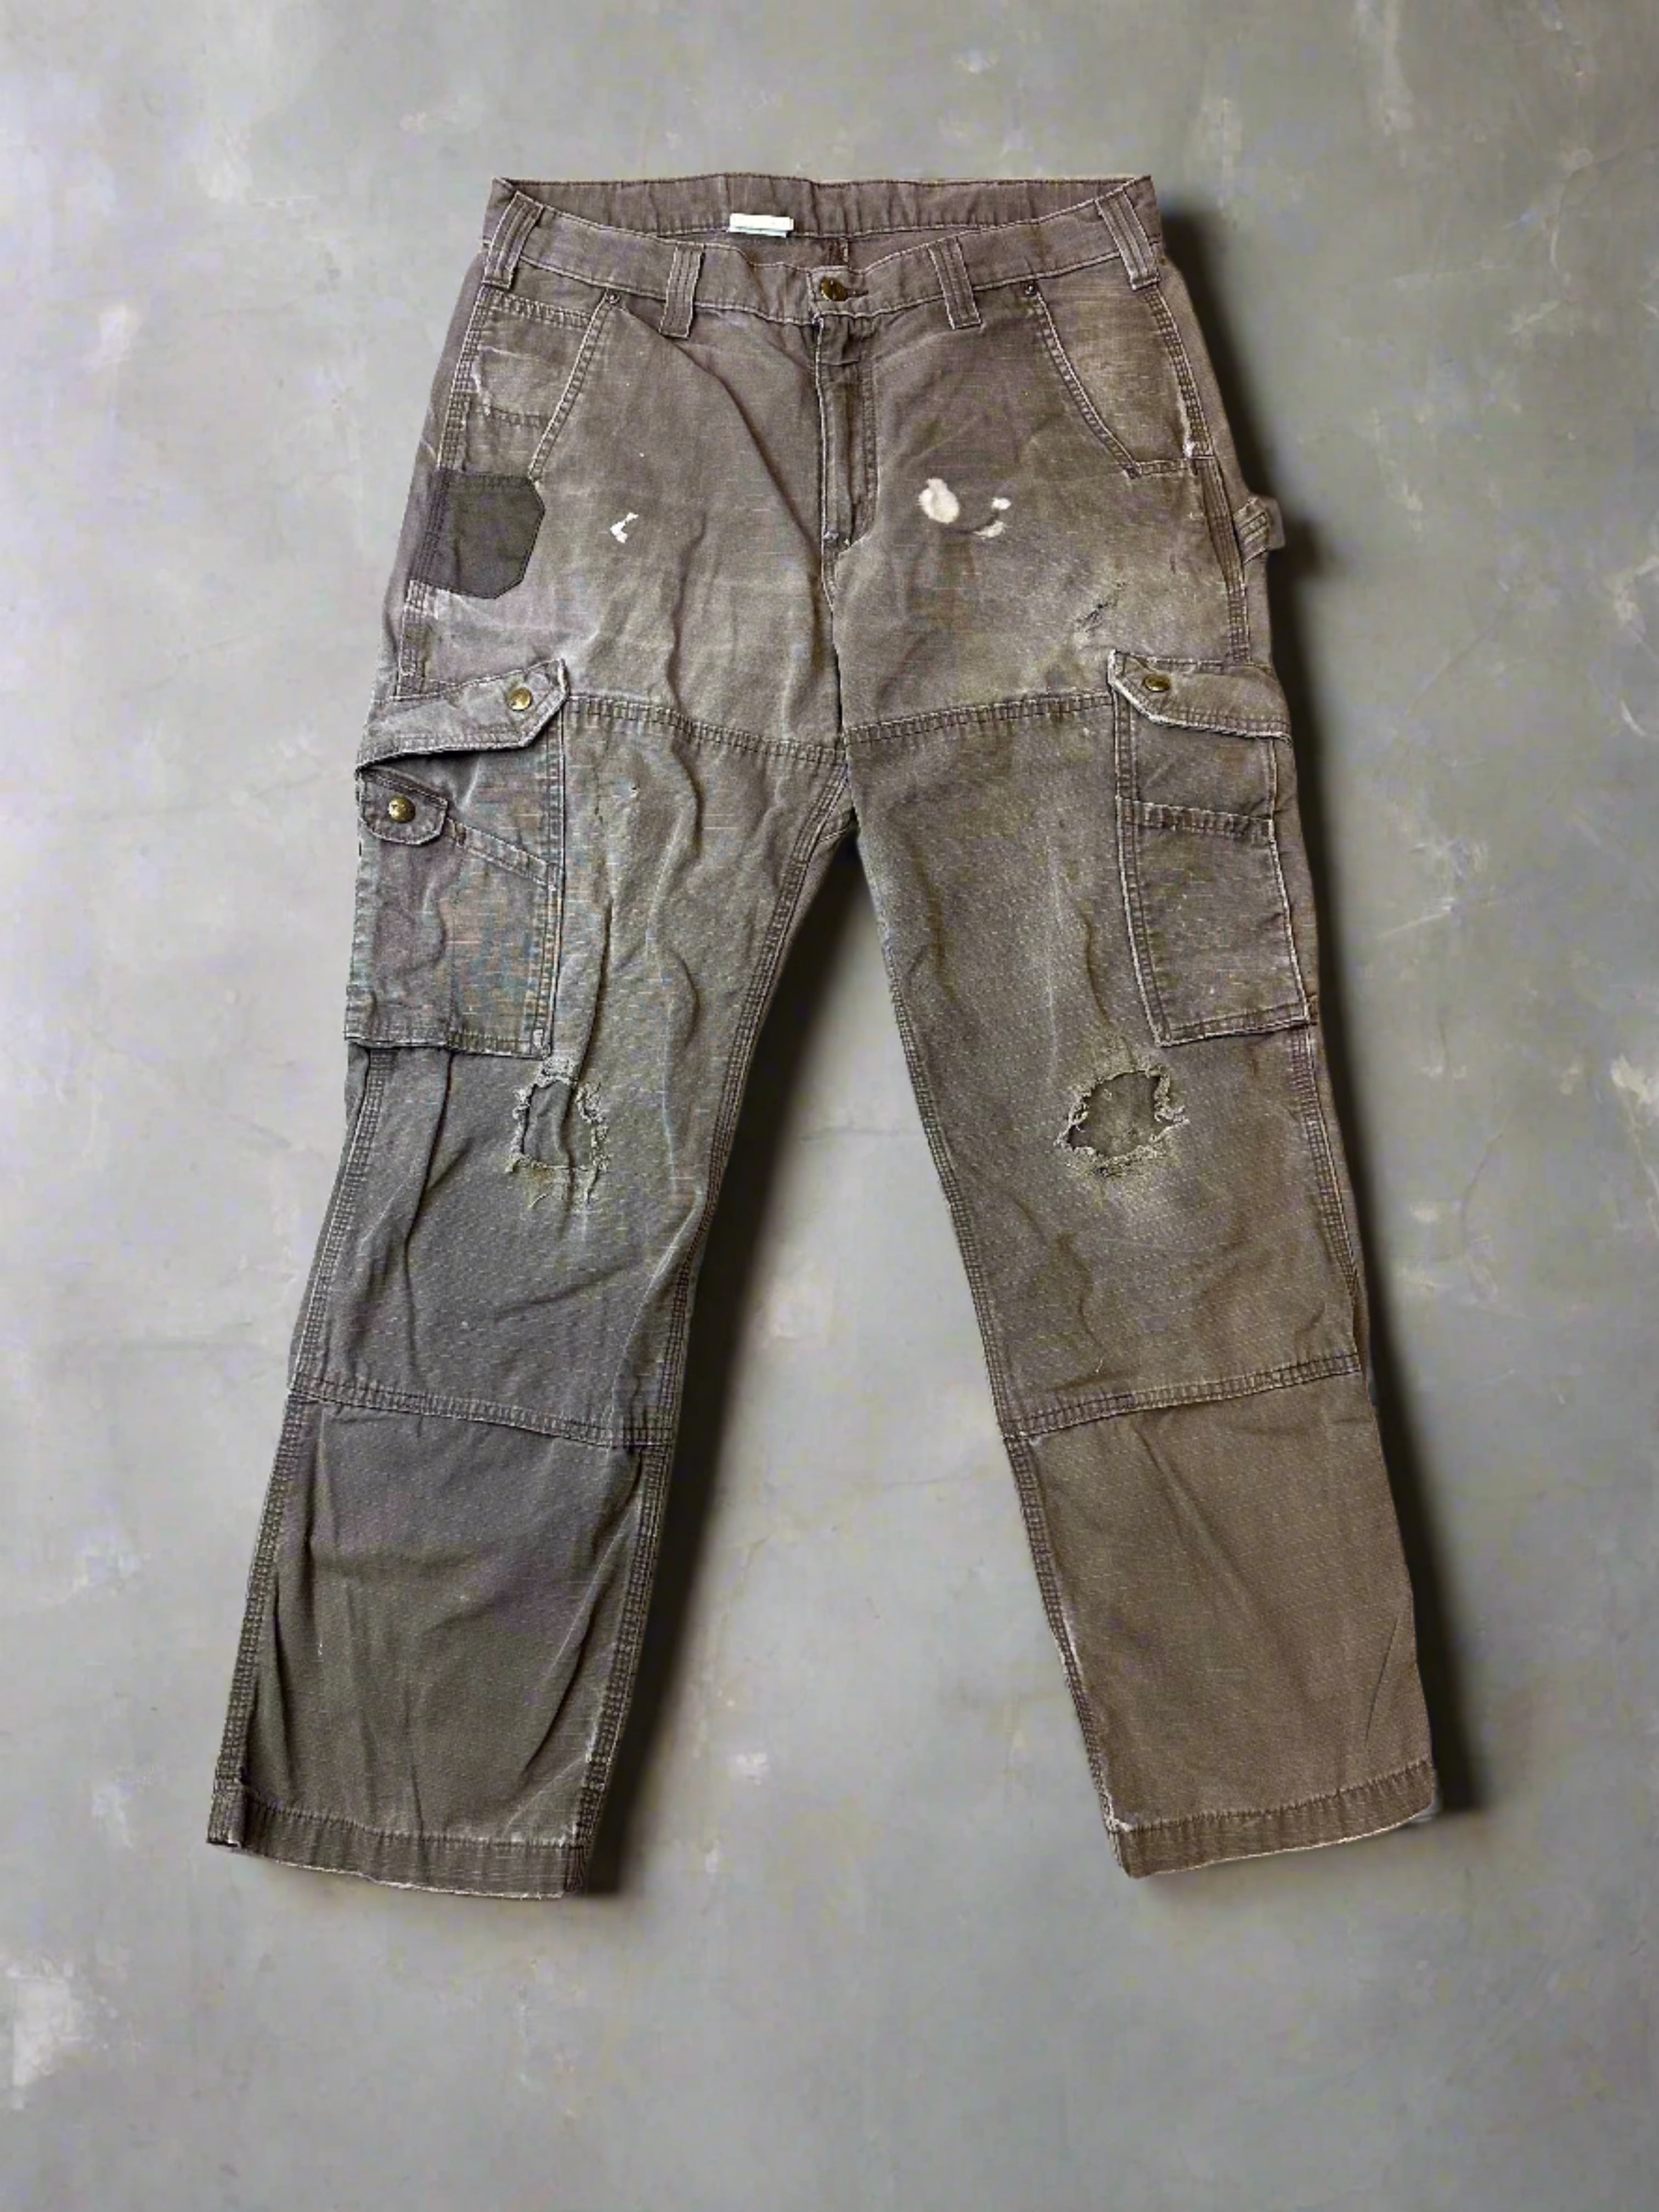 Vintage Carhartt Ripstop Cargo Pants - size 34x30